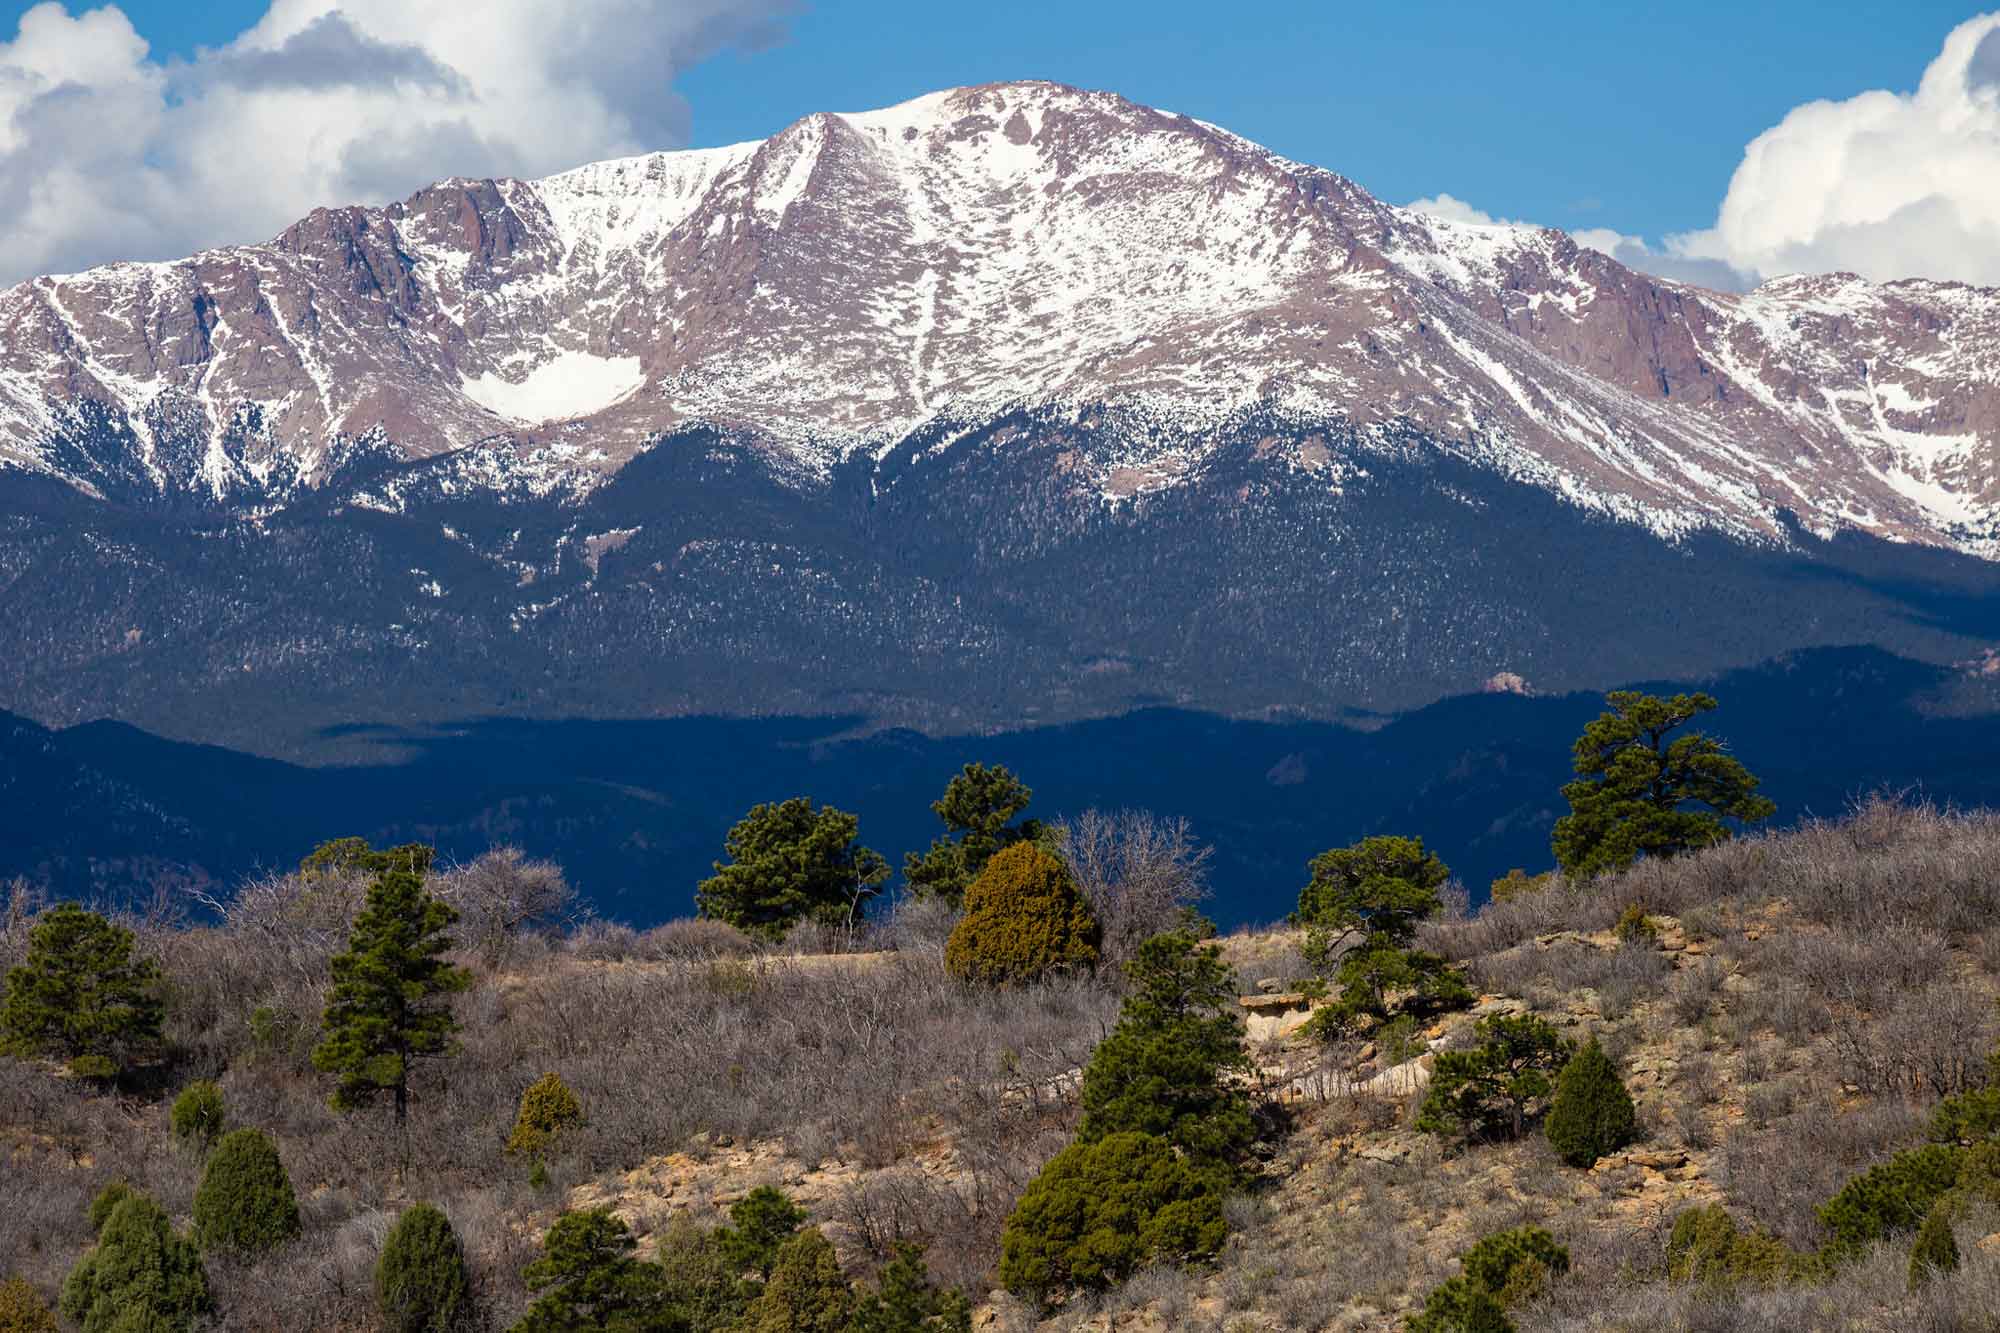 Photograph of Pikes Peak in Colorado.